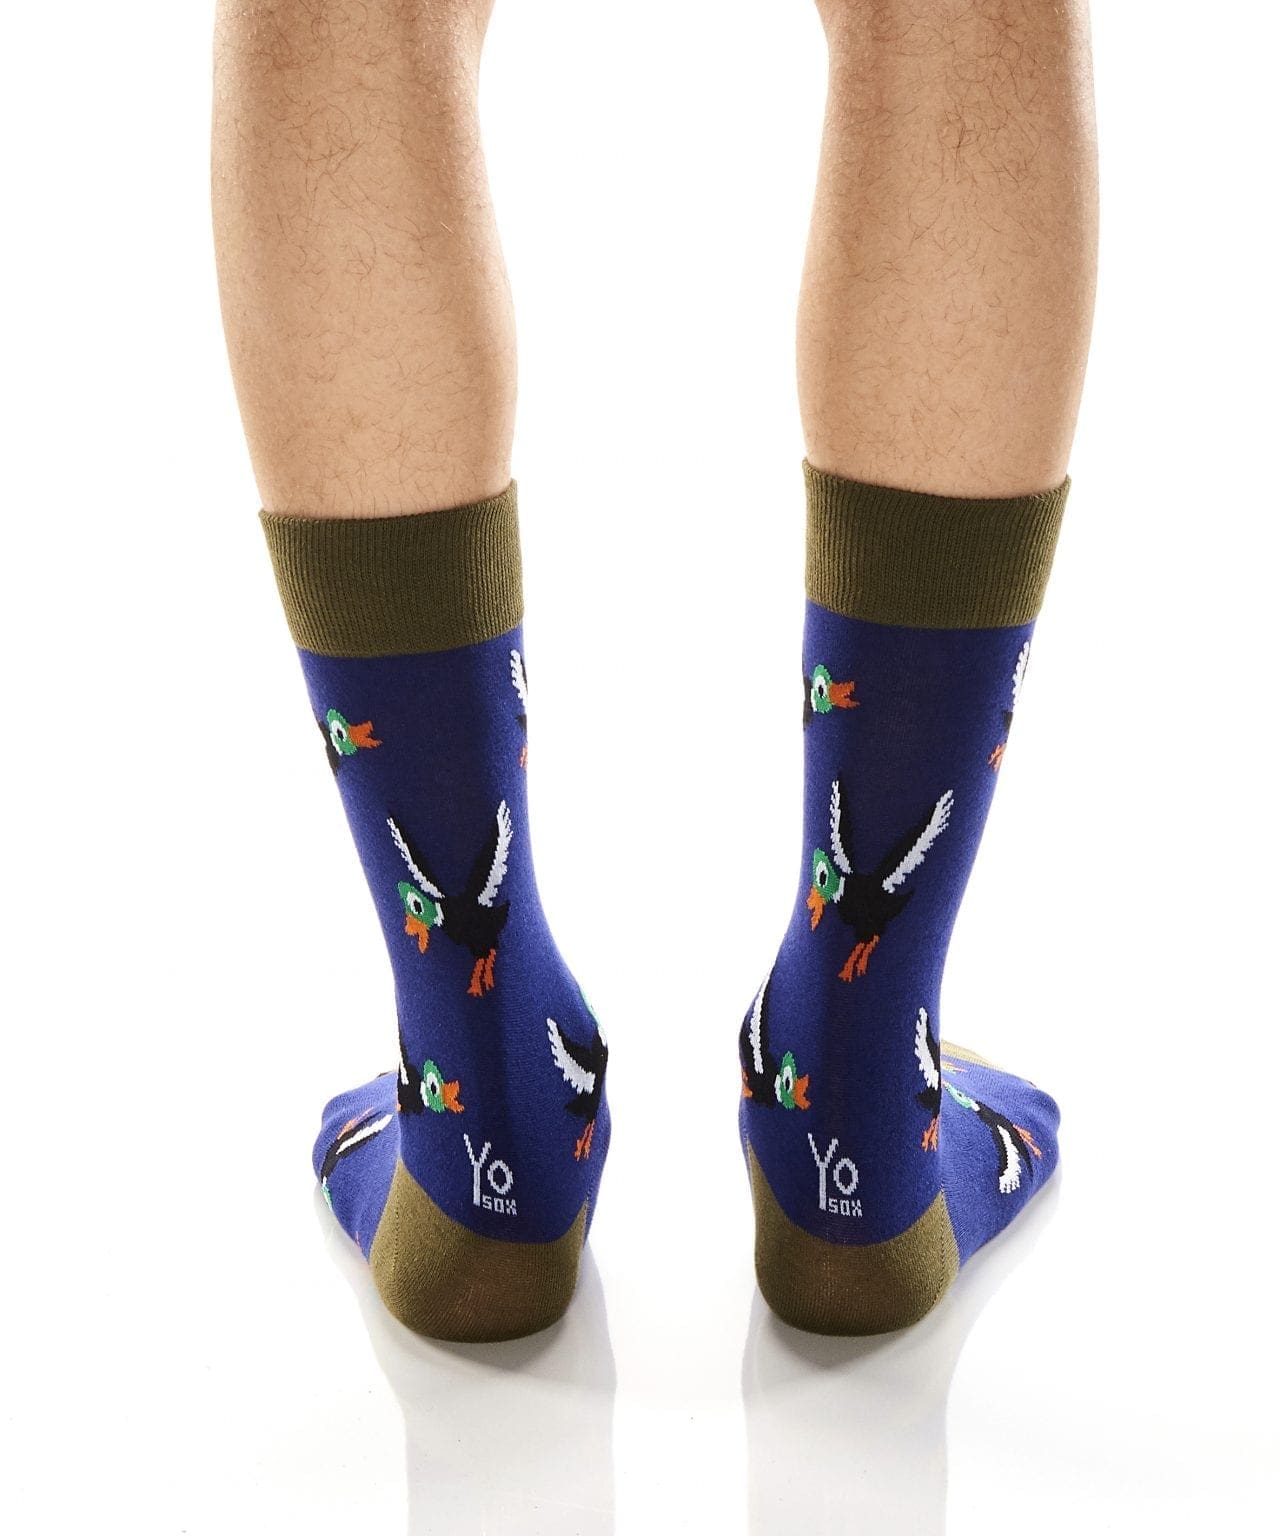 The Hunt design Men's novelty crew socks by Yo Sox rear view